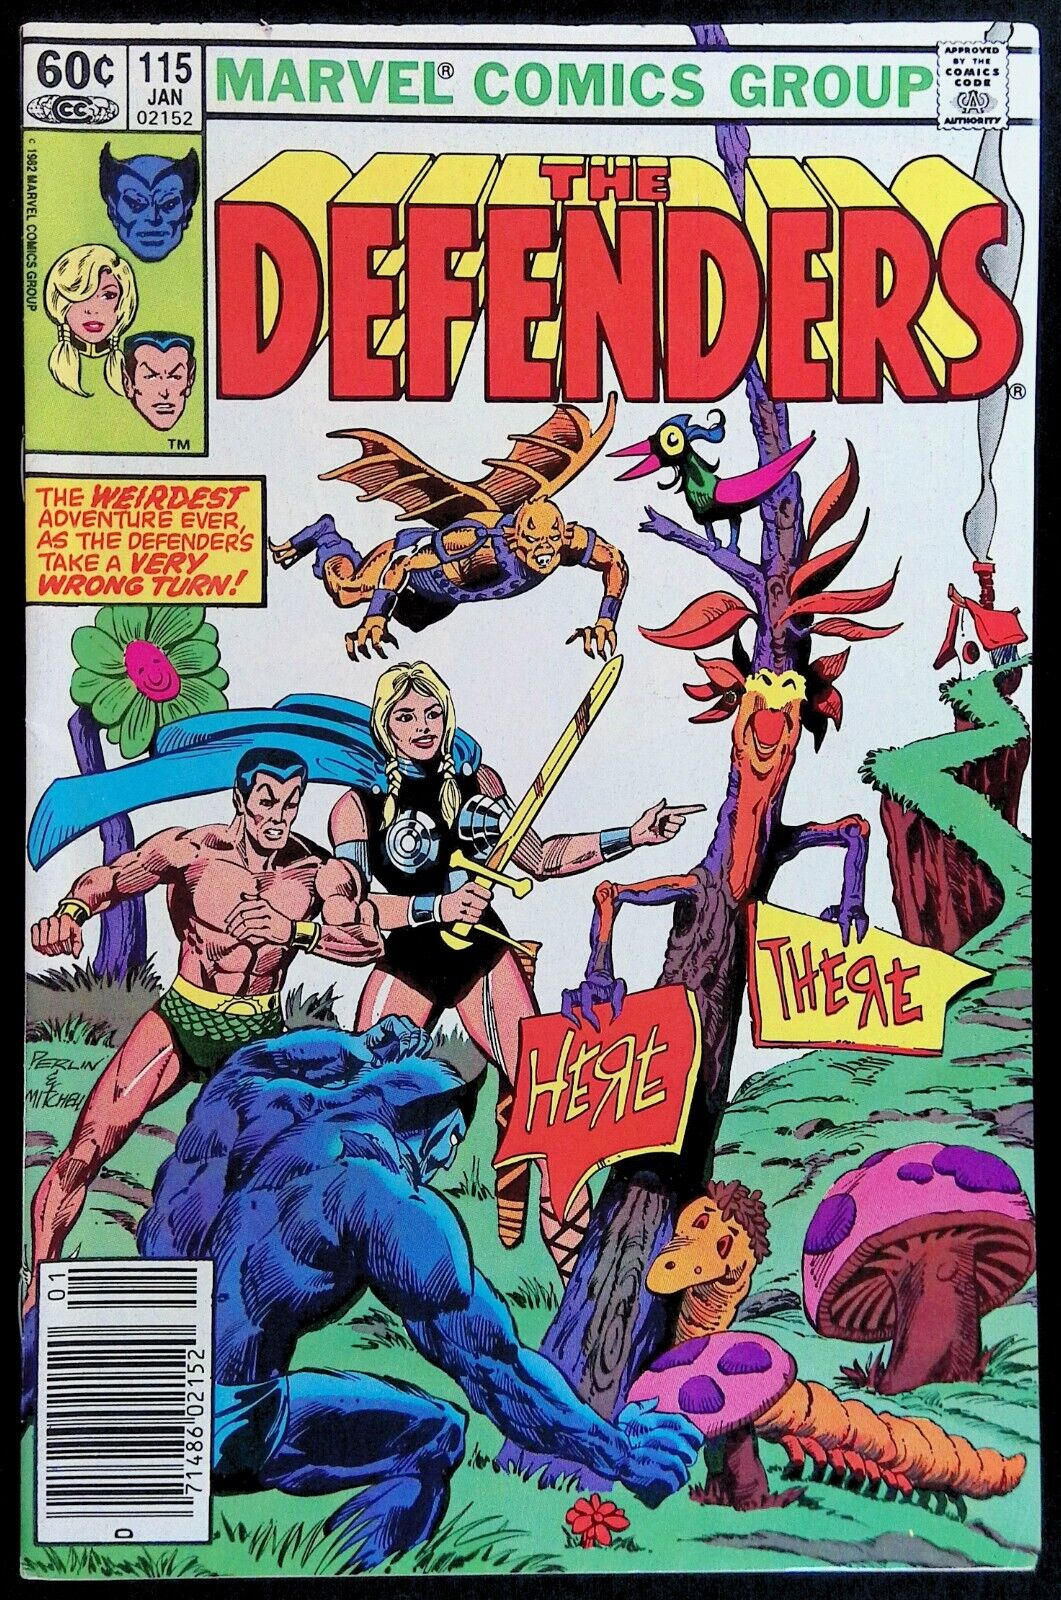 THE DEFENDERS VOL. 1 #115 ~ NEWSSTAND VARIANT ~ FN+ 1983 MARVEL COMICS